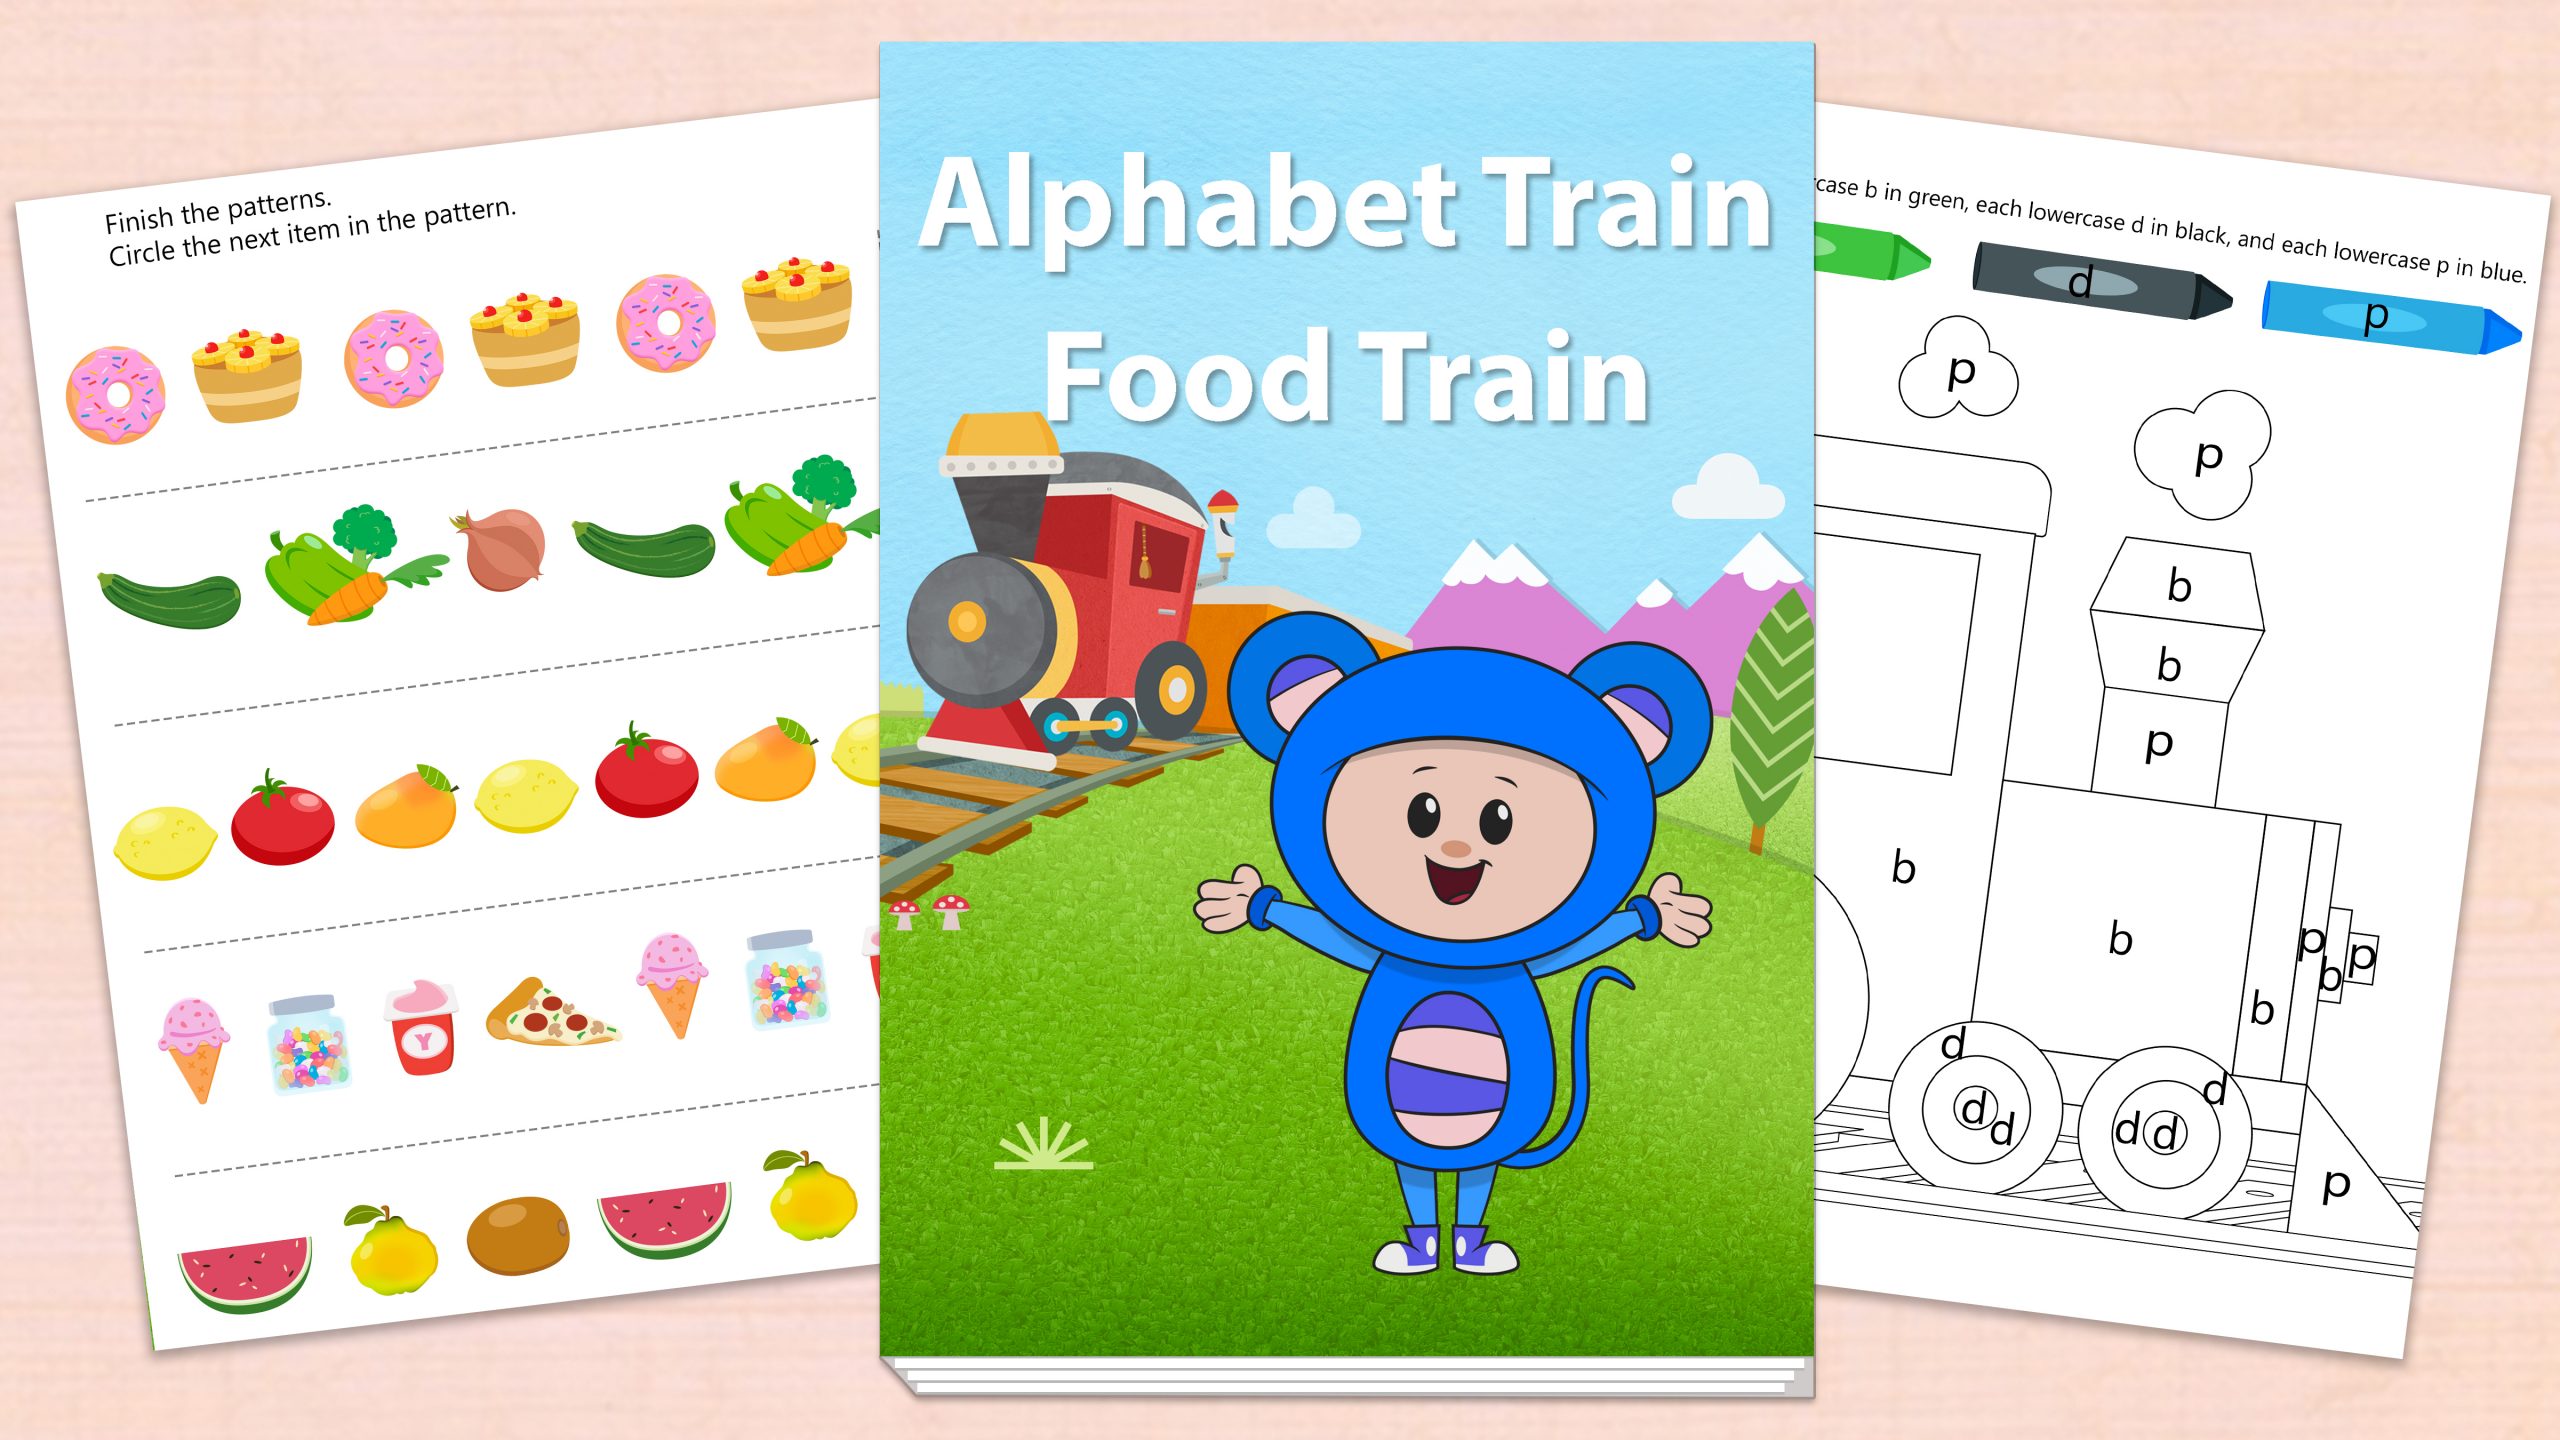 Alphabet train food train